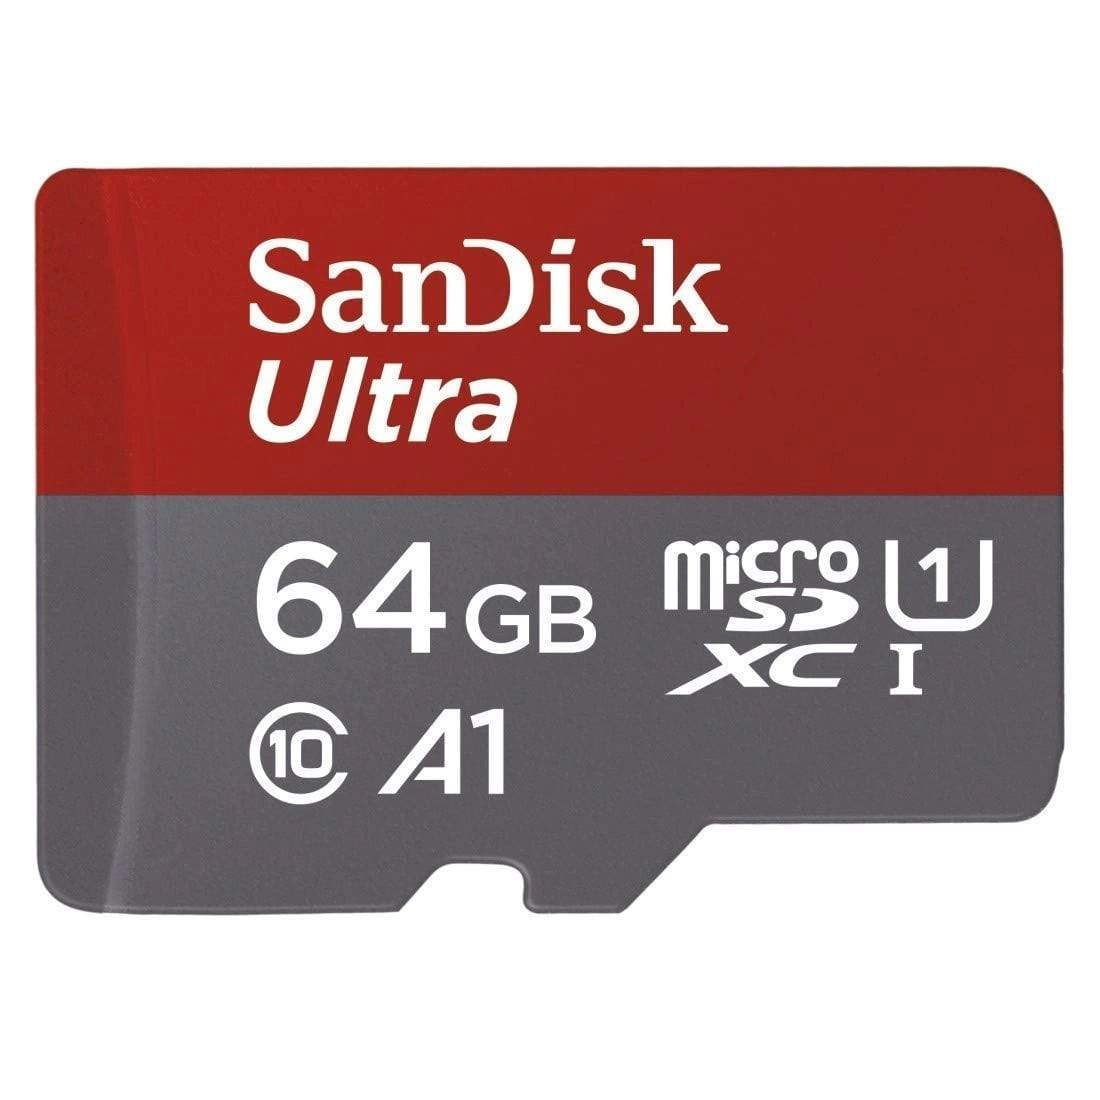 SanDisk Ultra 64GB MicroSD SDHC Memory Card Class 10 Hi-Speed-Memory Cards-dealsplant